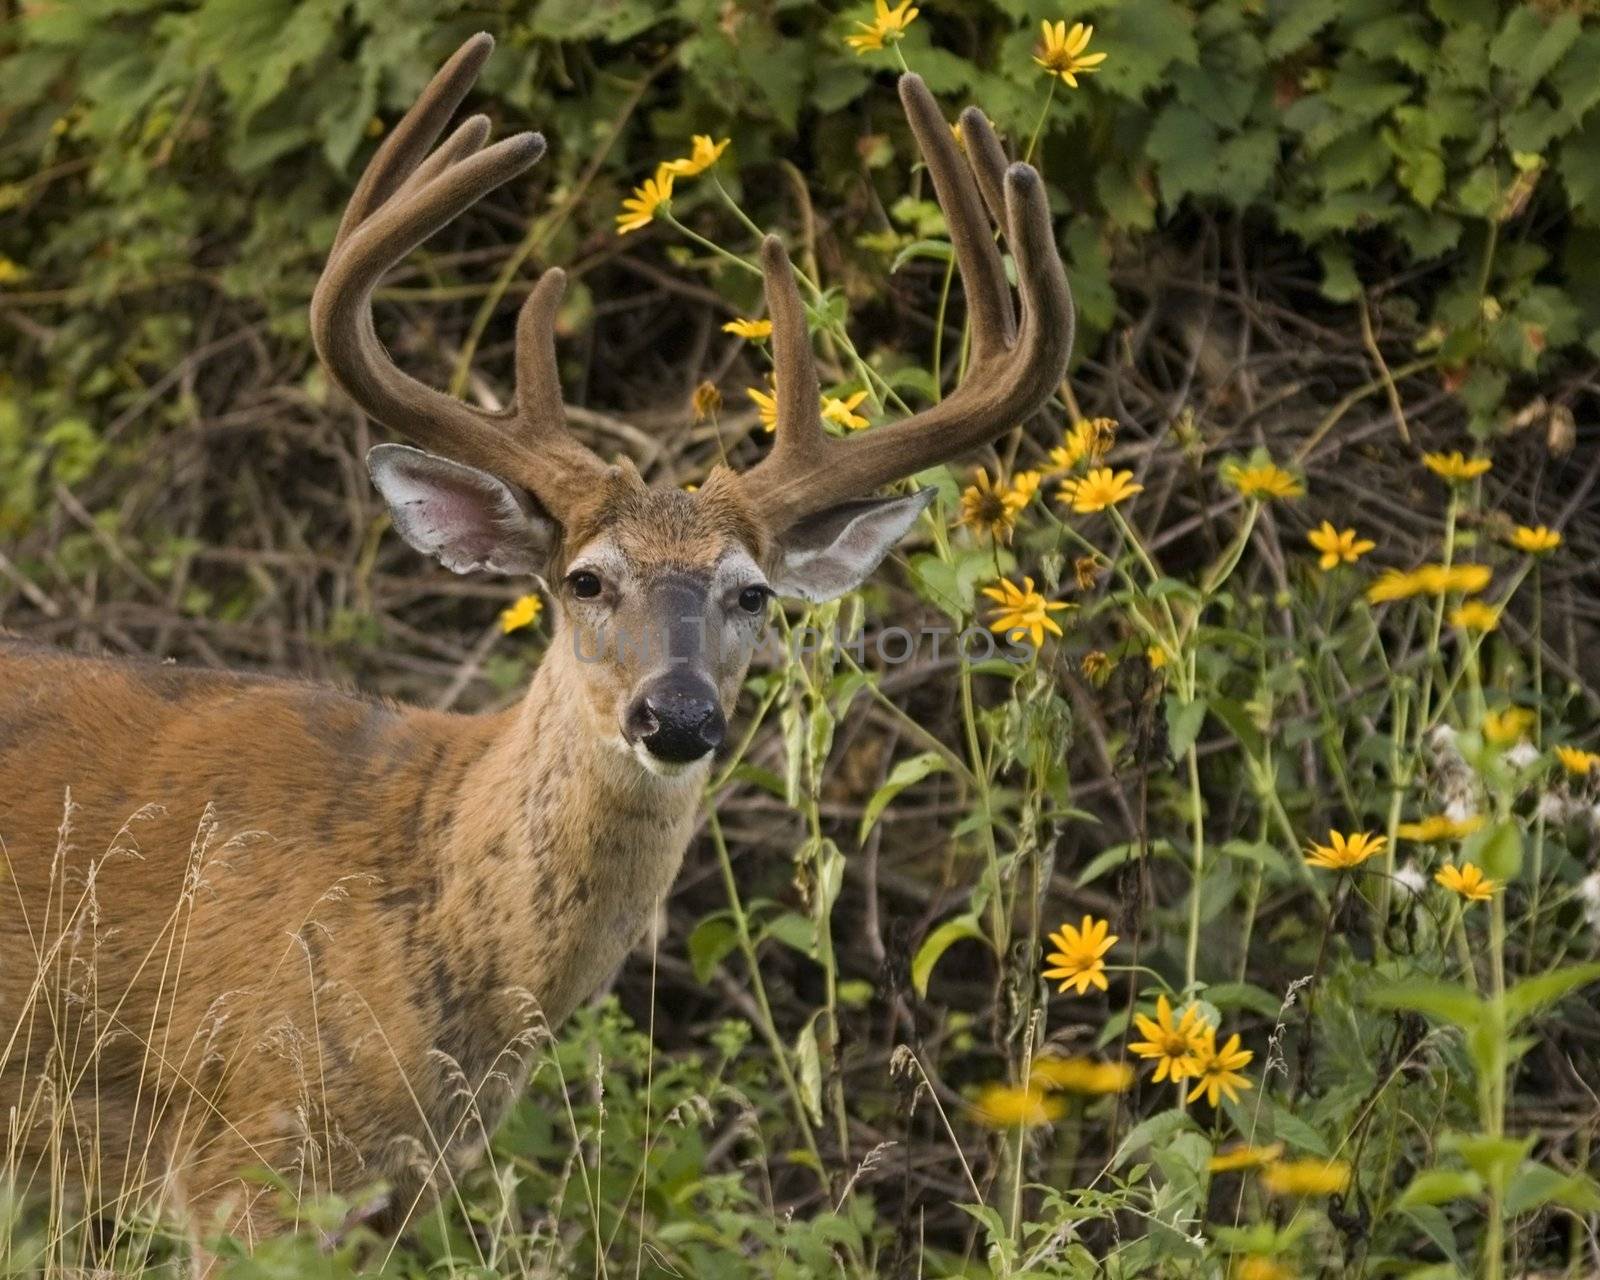 Whitetail deer buck standing in a field.